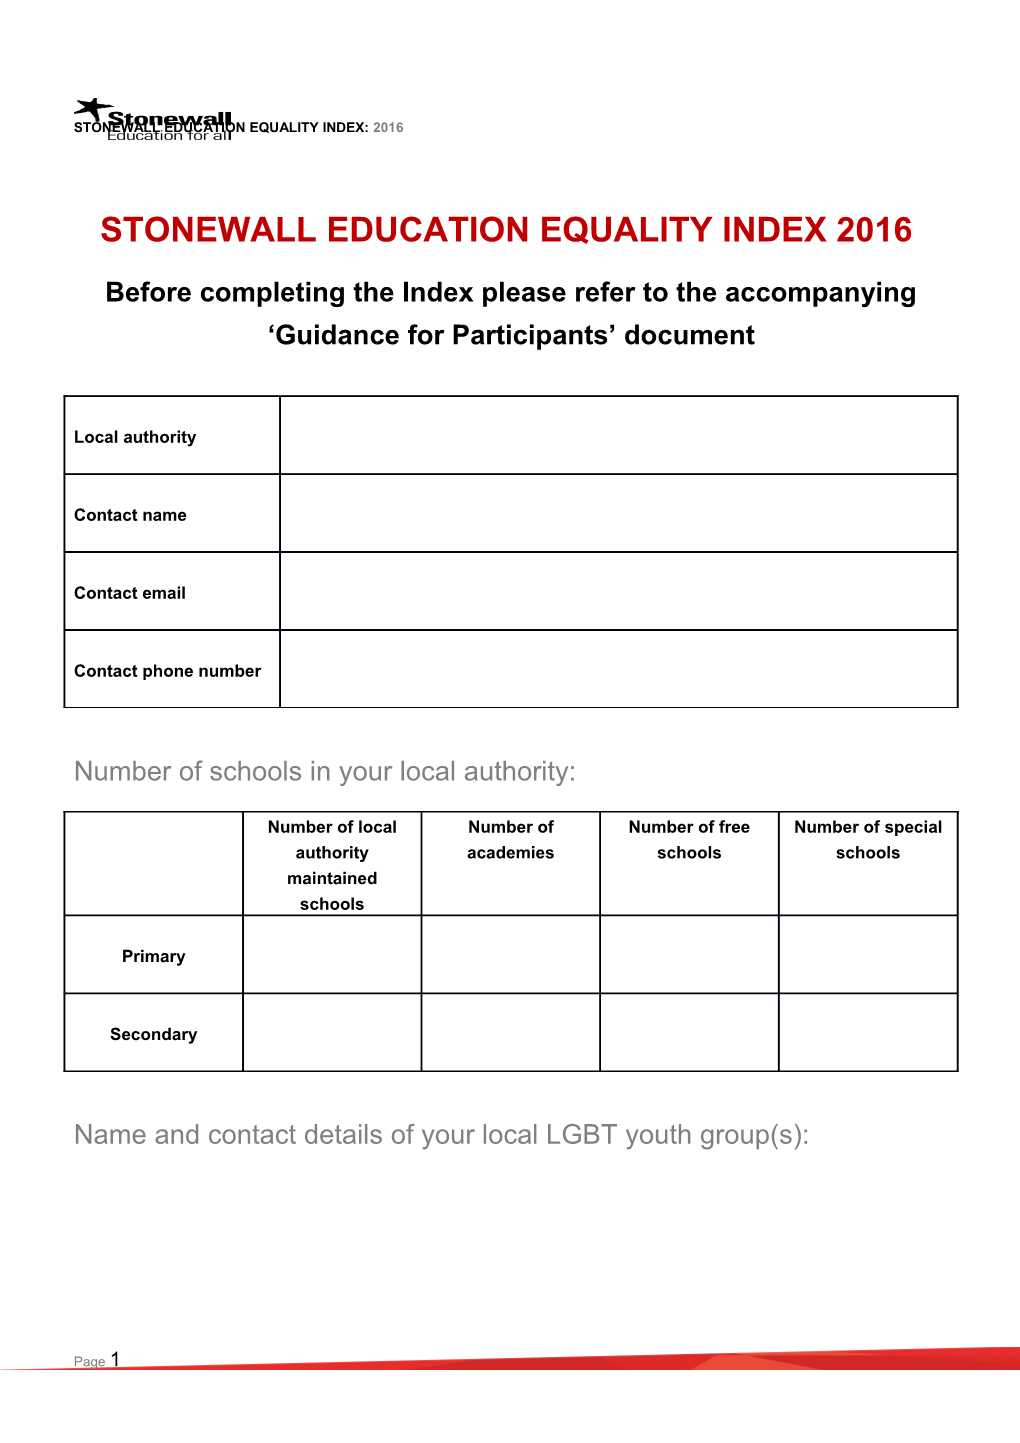 Stonewall Education Equality Index 2016